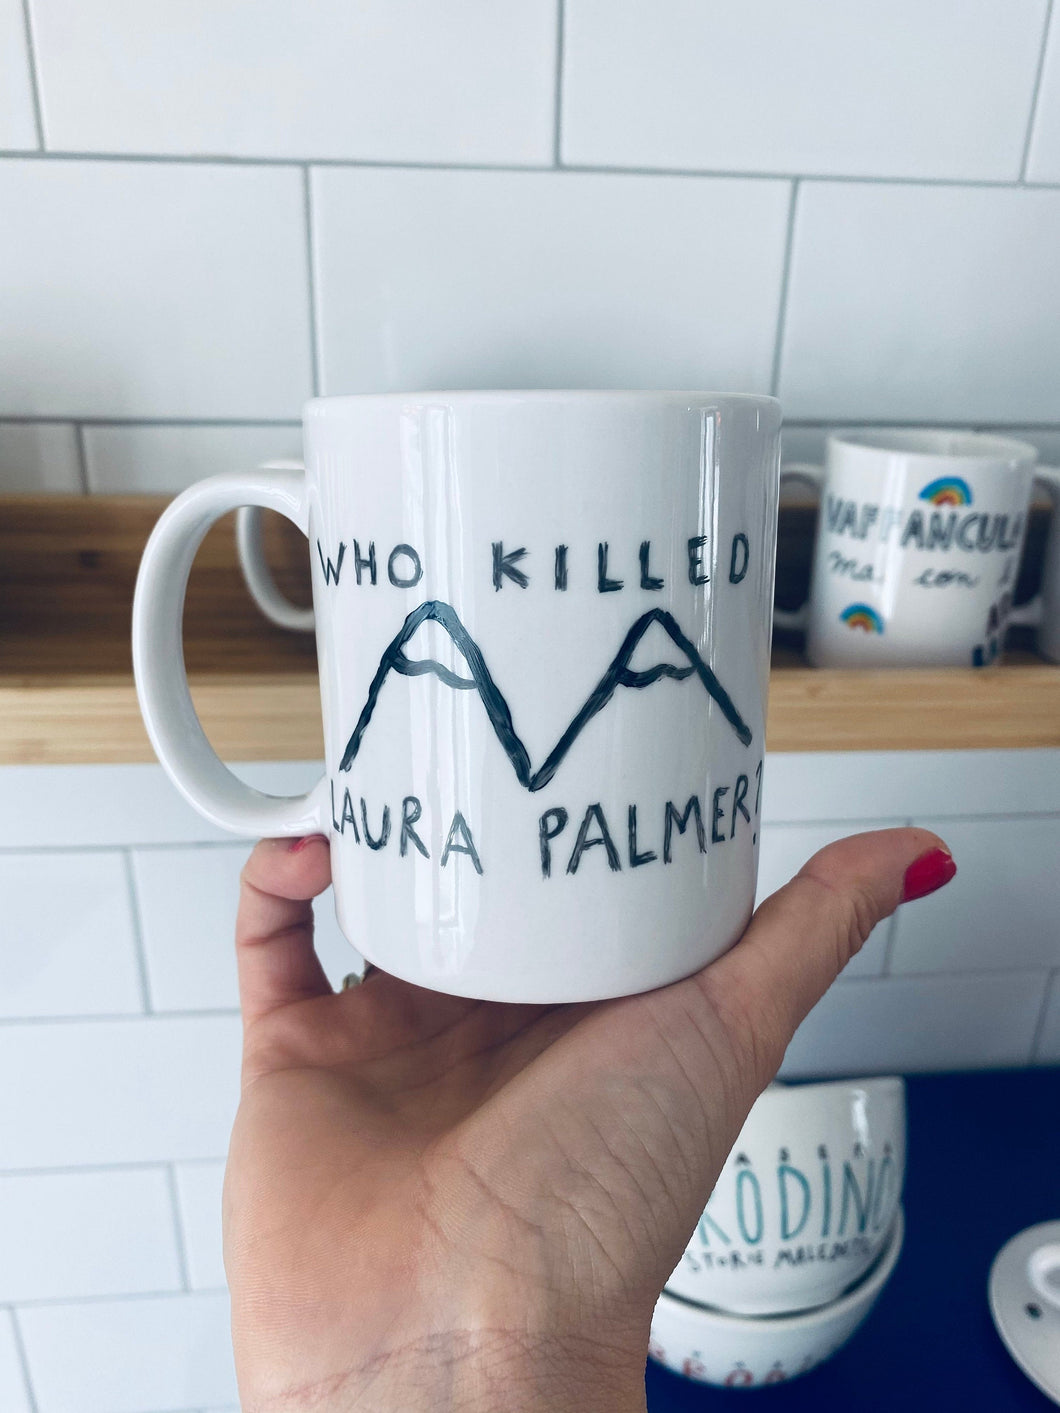 Who Killed Laura Palmer?